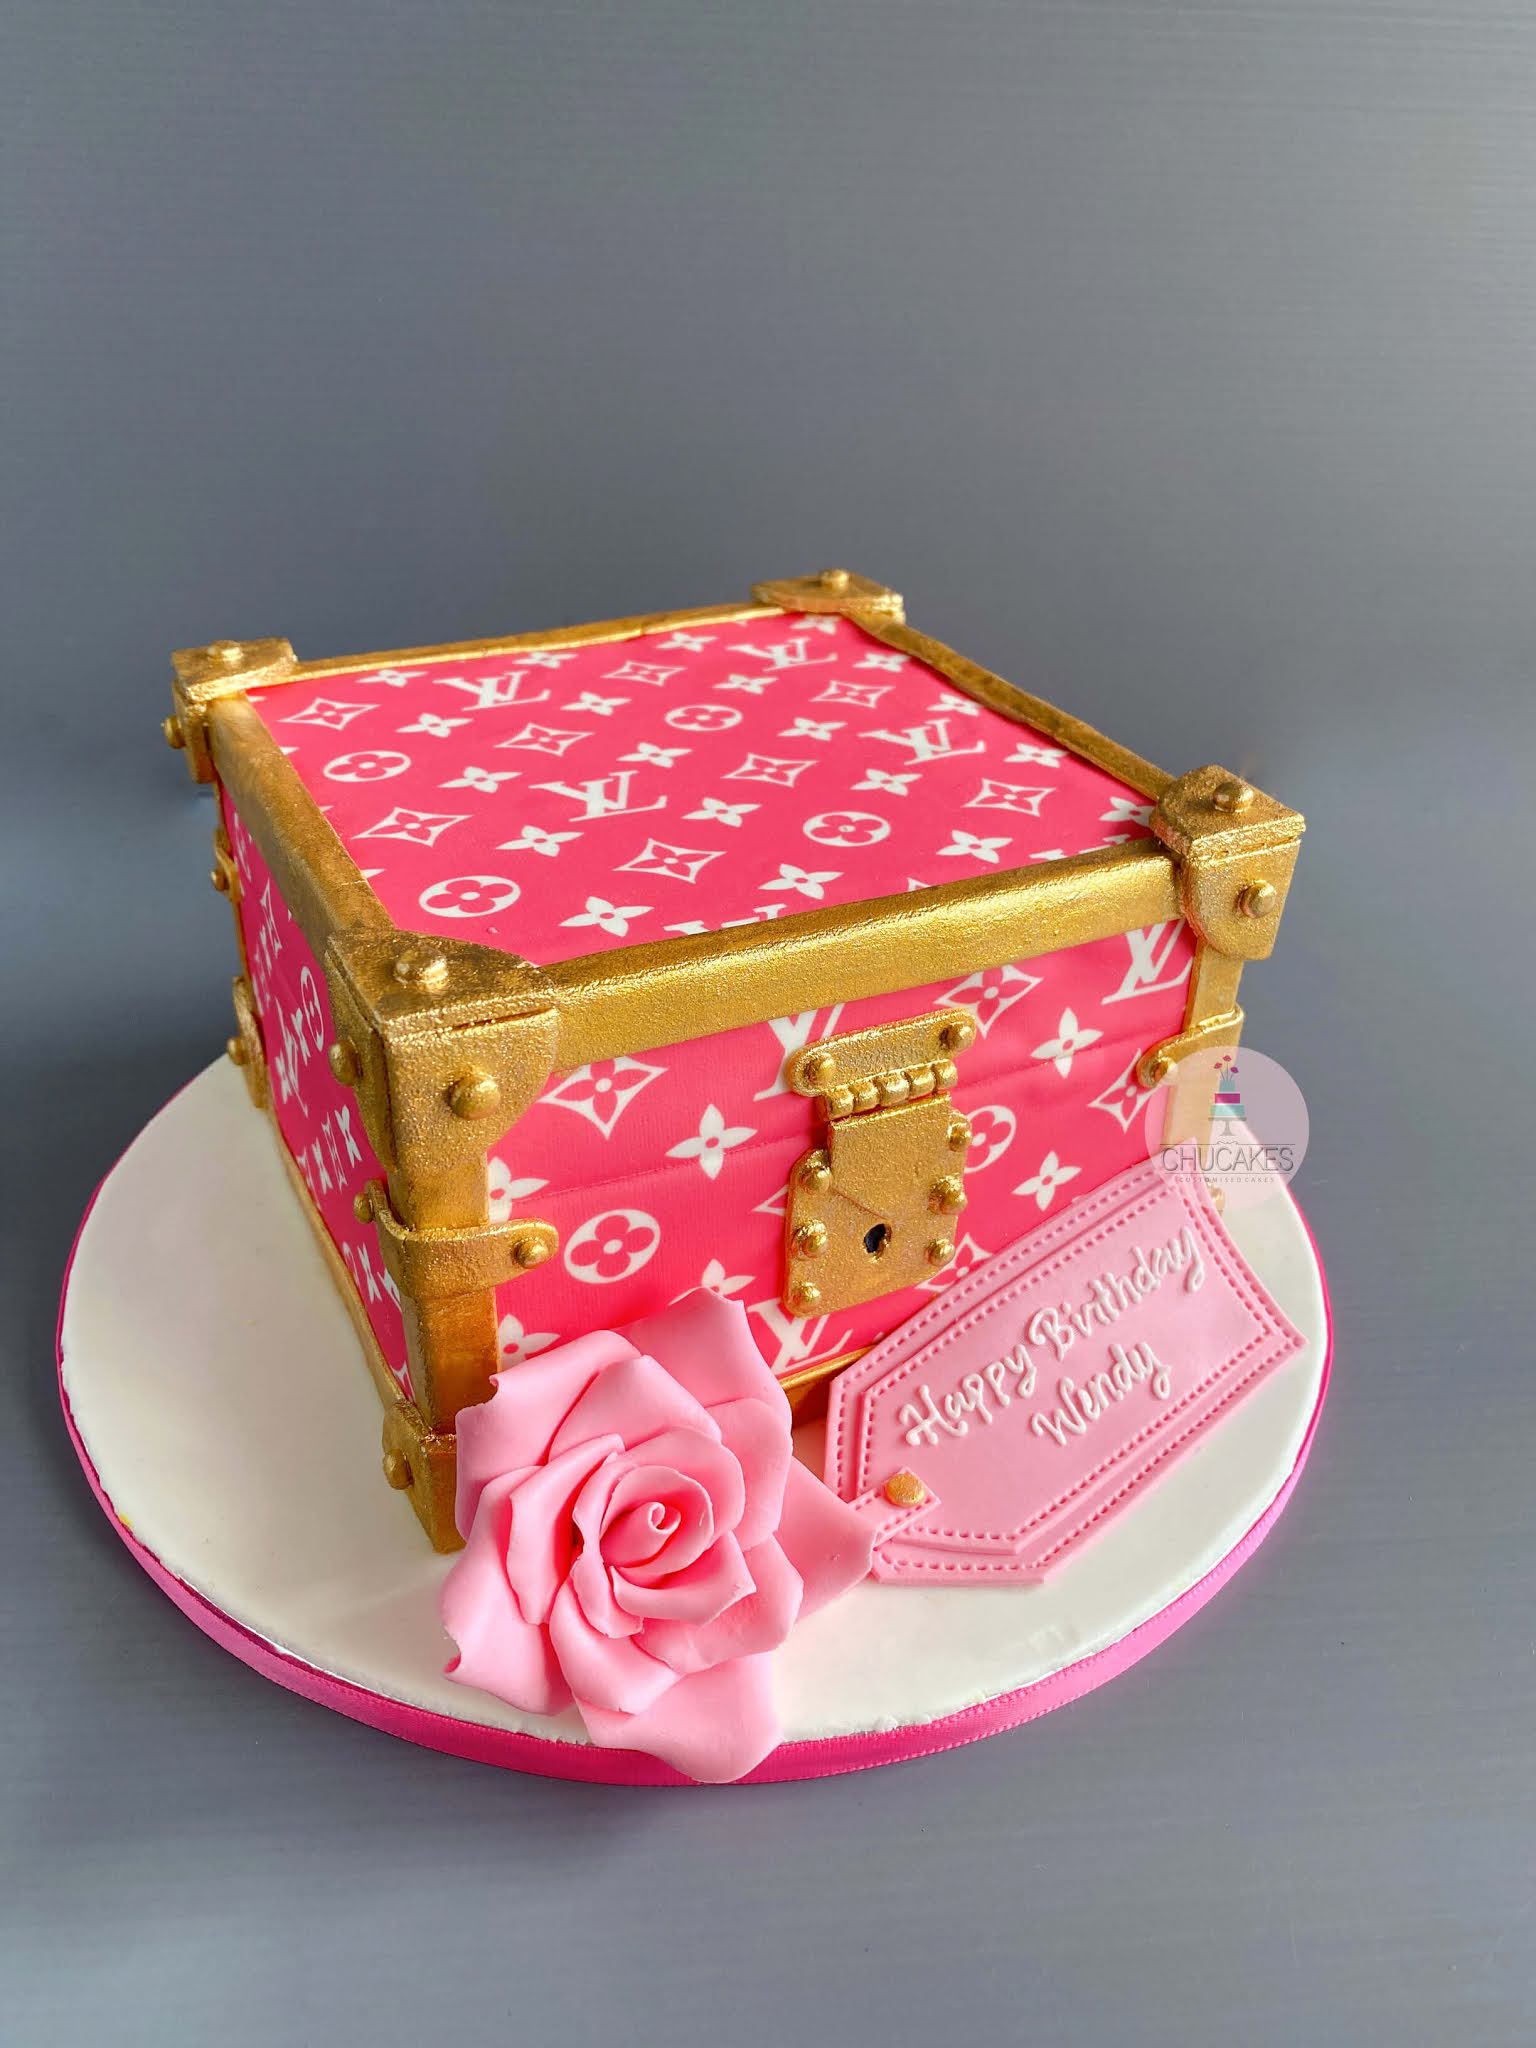 LV Box with KAWS  LOUIS XIV CAKE AND WEDDING